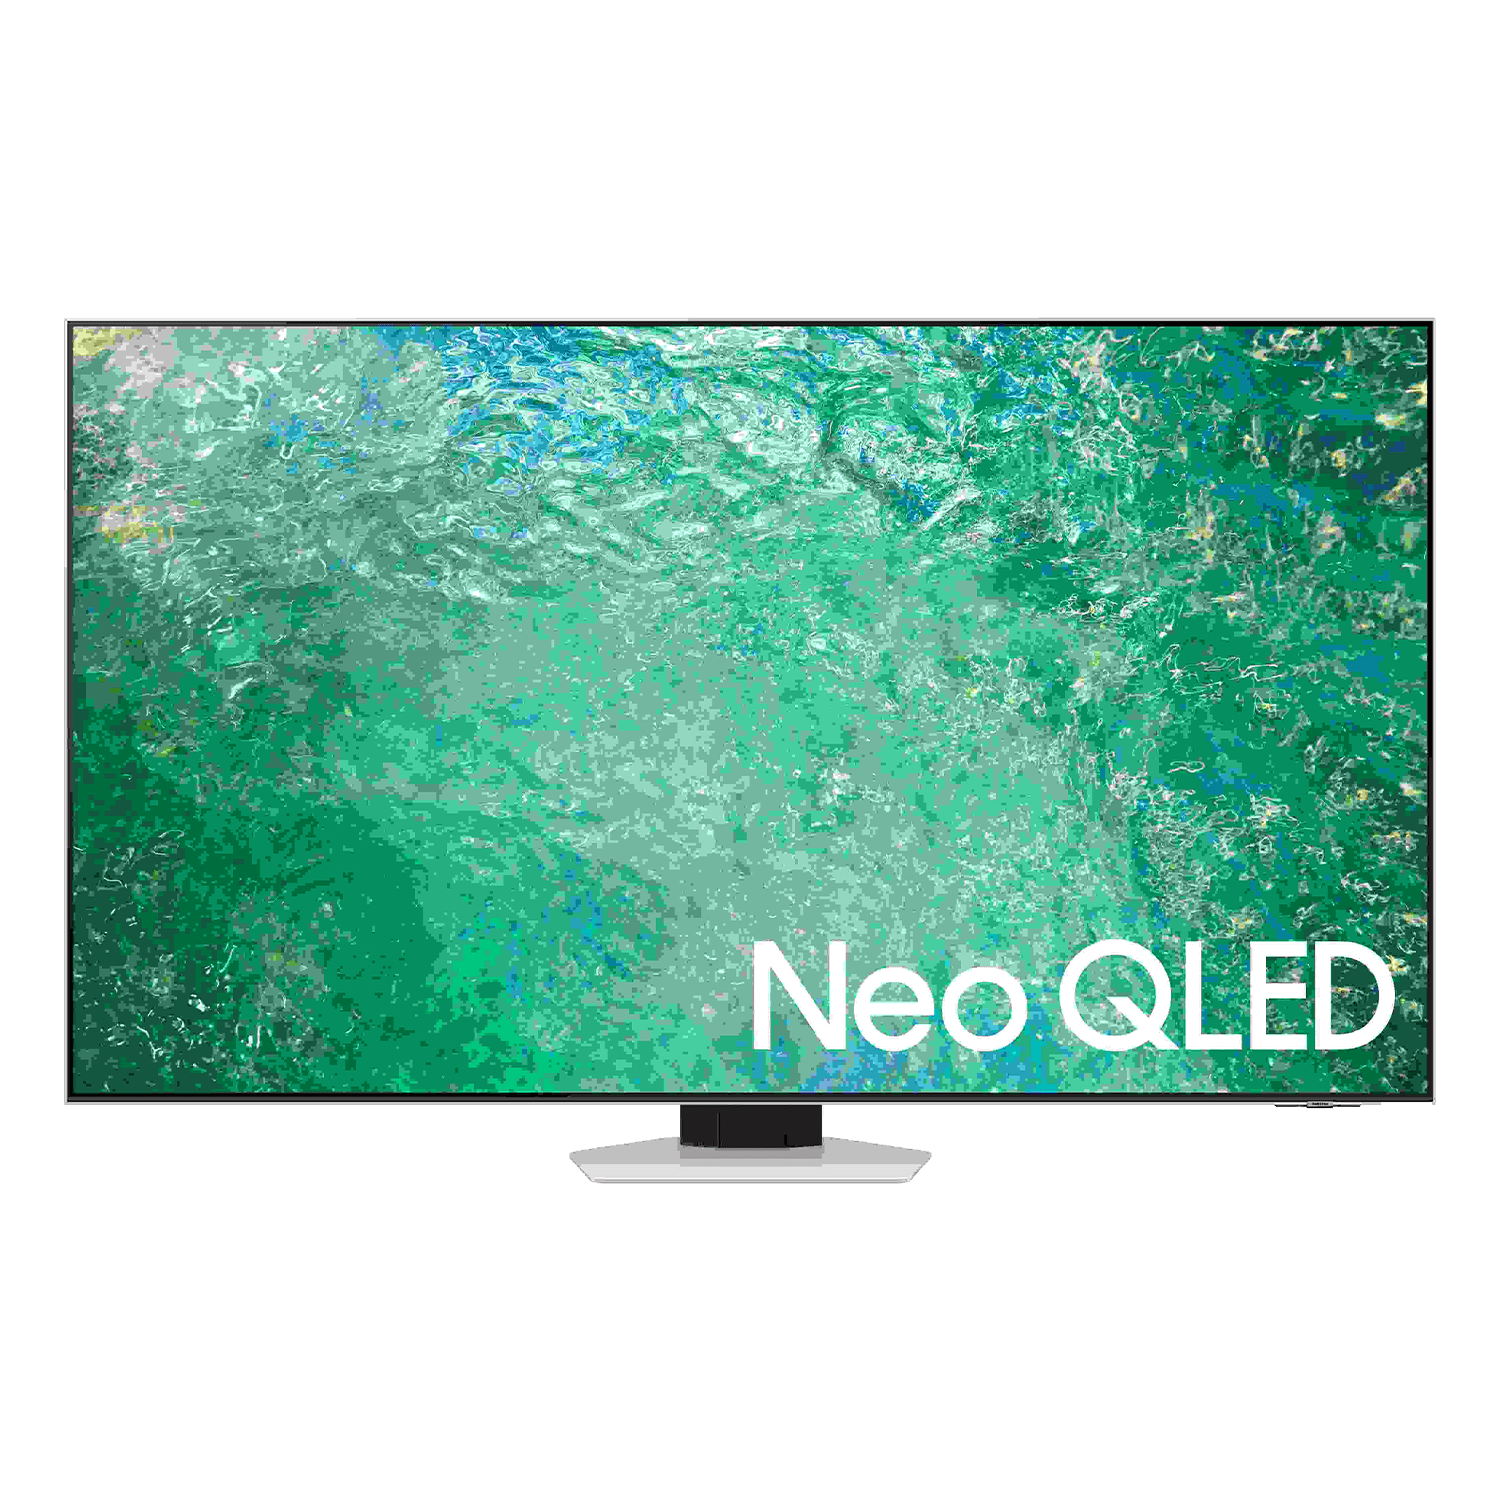 Televisor Samsung 55 pulgadas Neo QLED Smart TV 4K